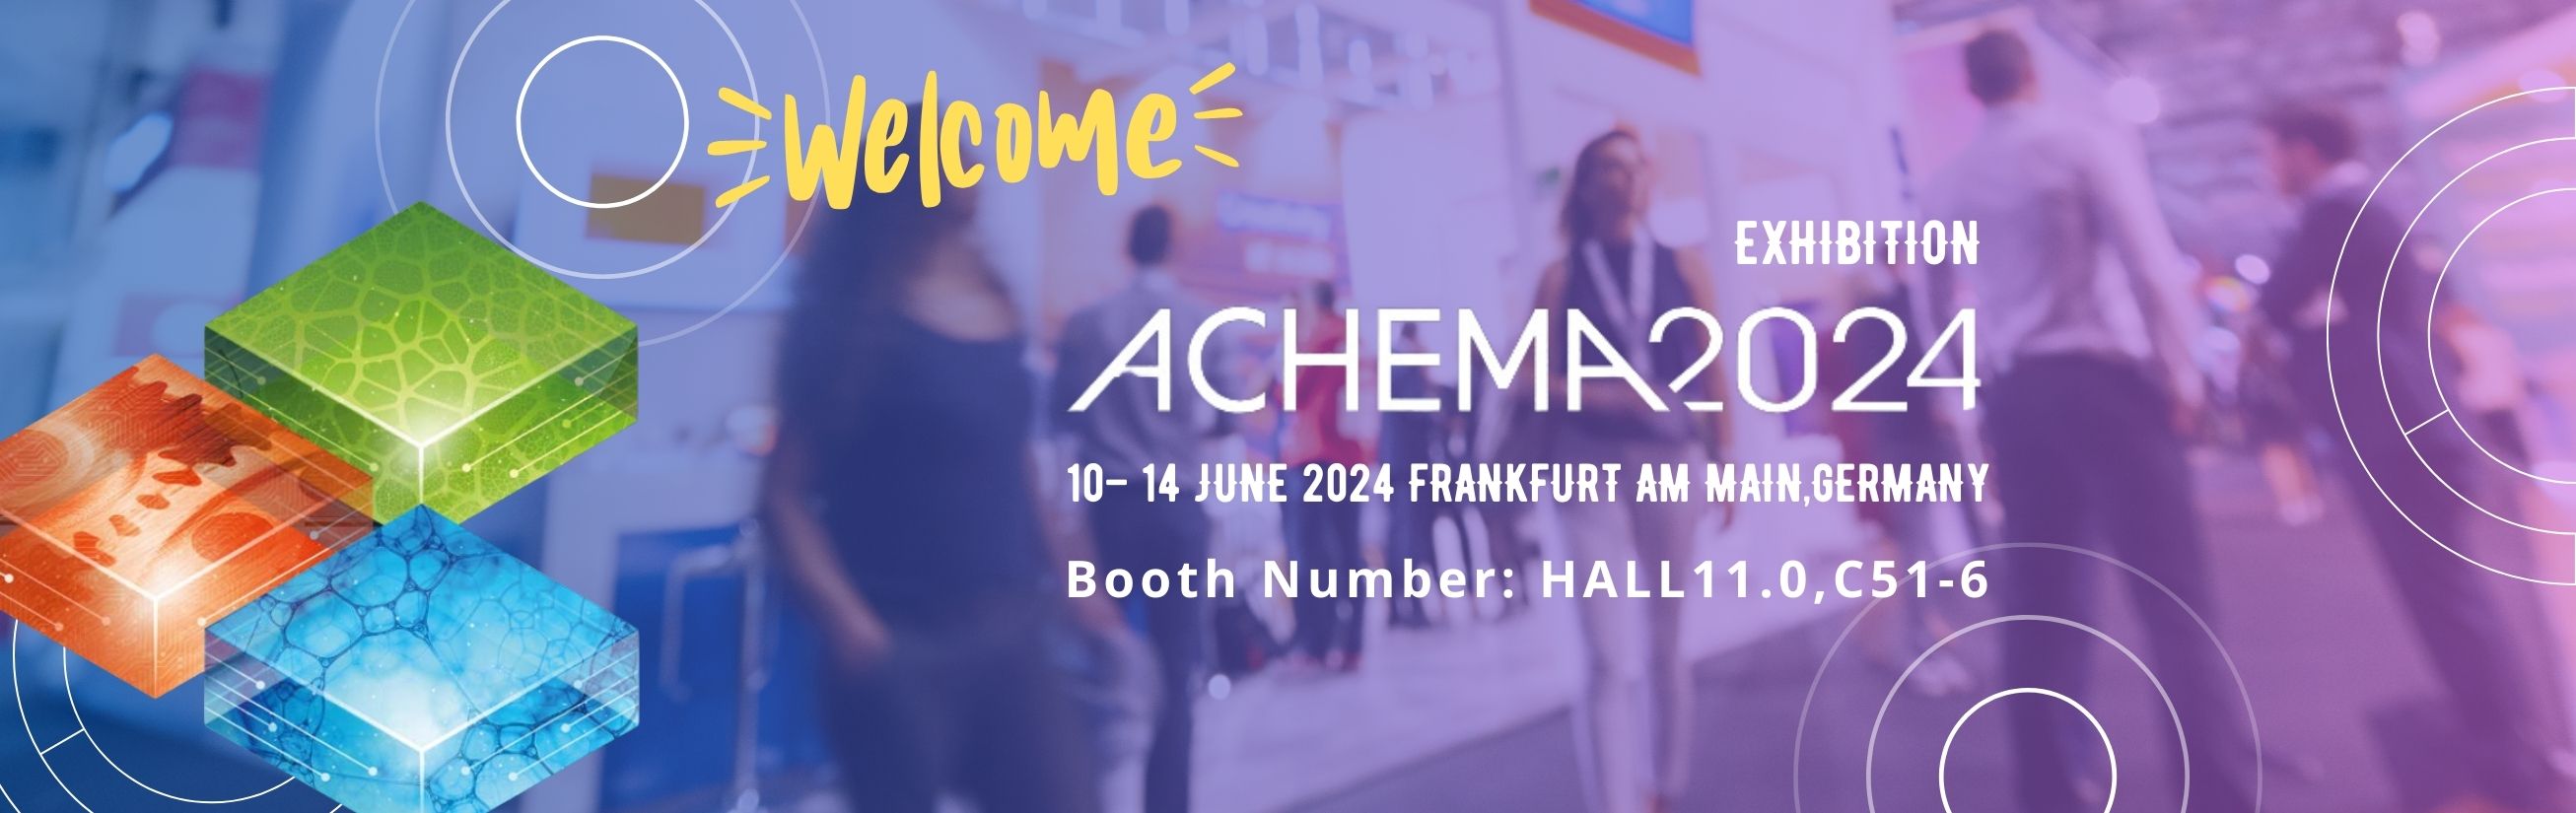 ACHEMA Show 2024 Frankfurt Germany  Banner Website HENGKO